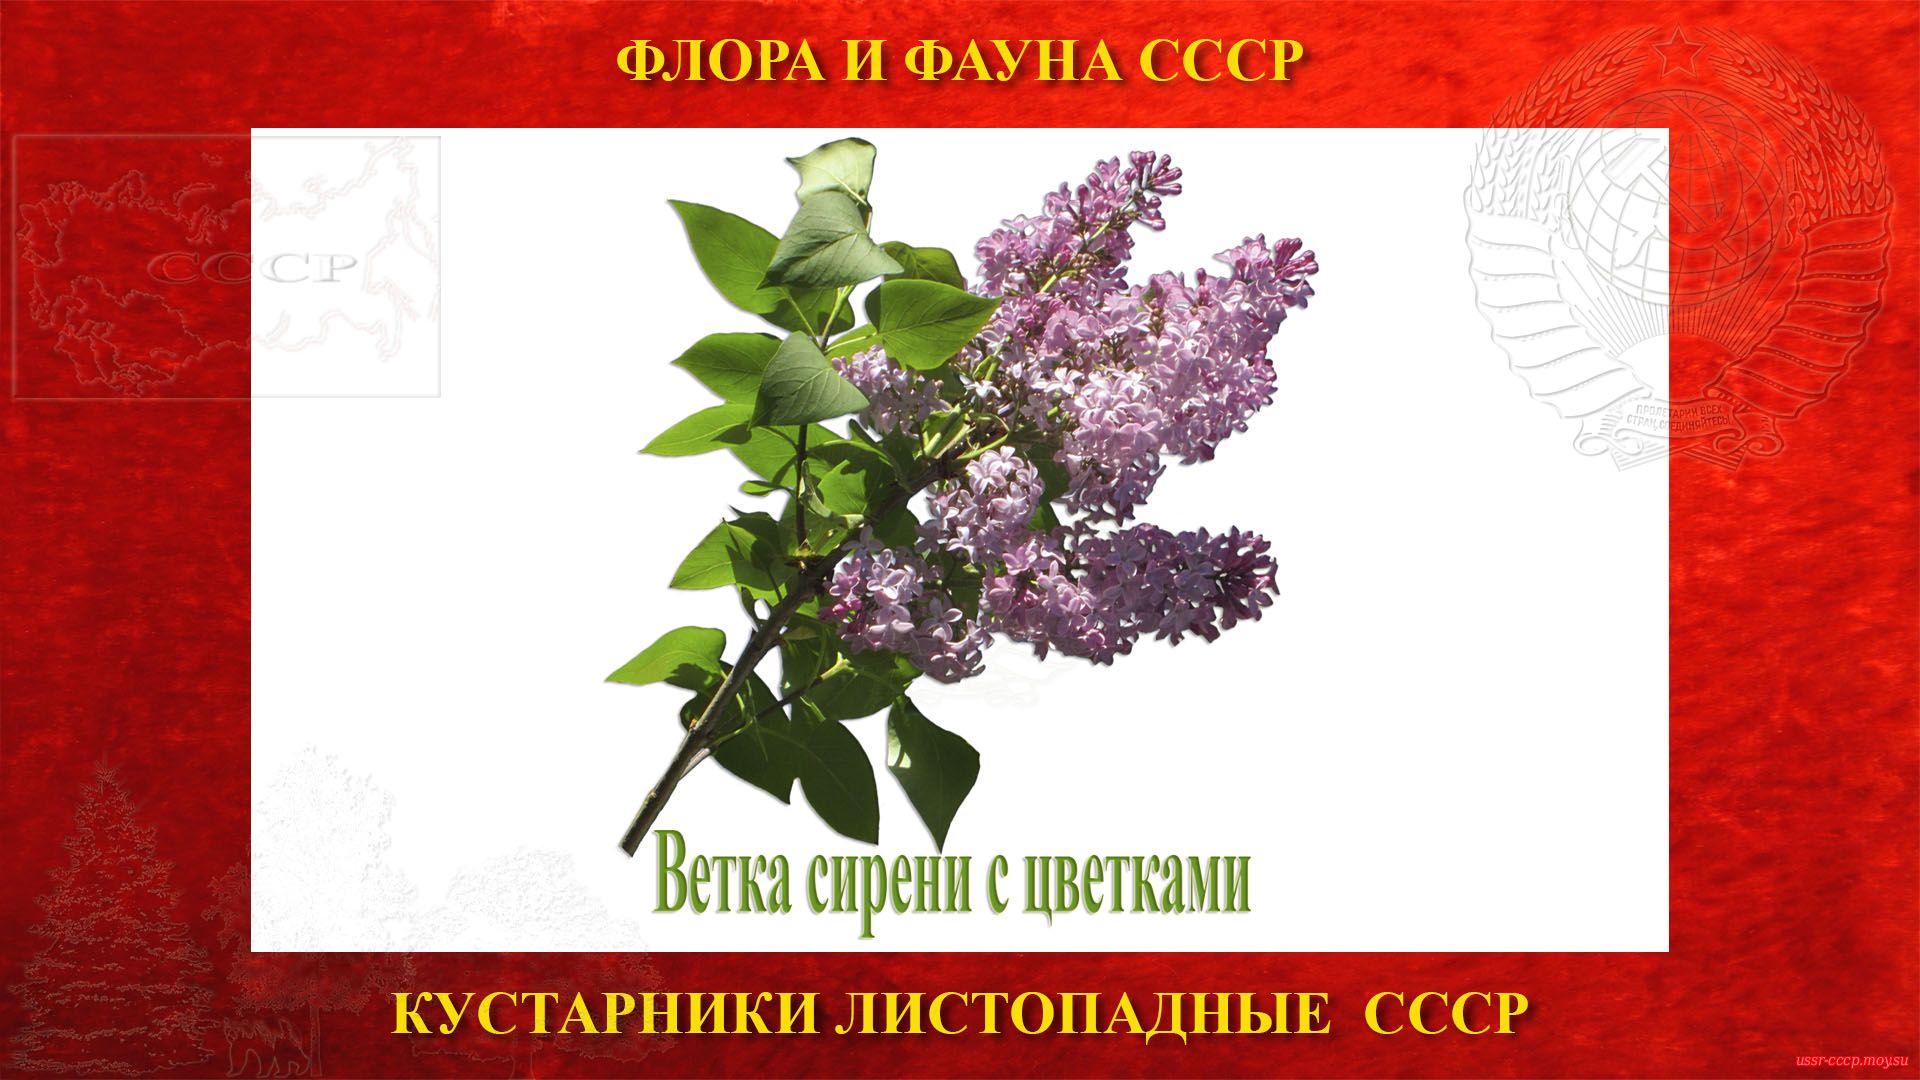 Ветка сирени с цветками СССР.